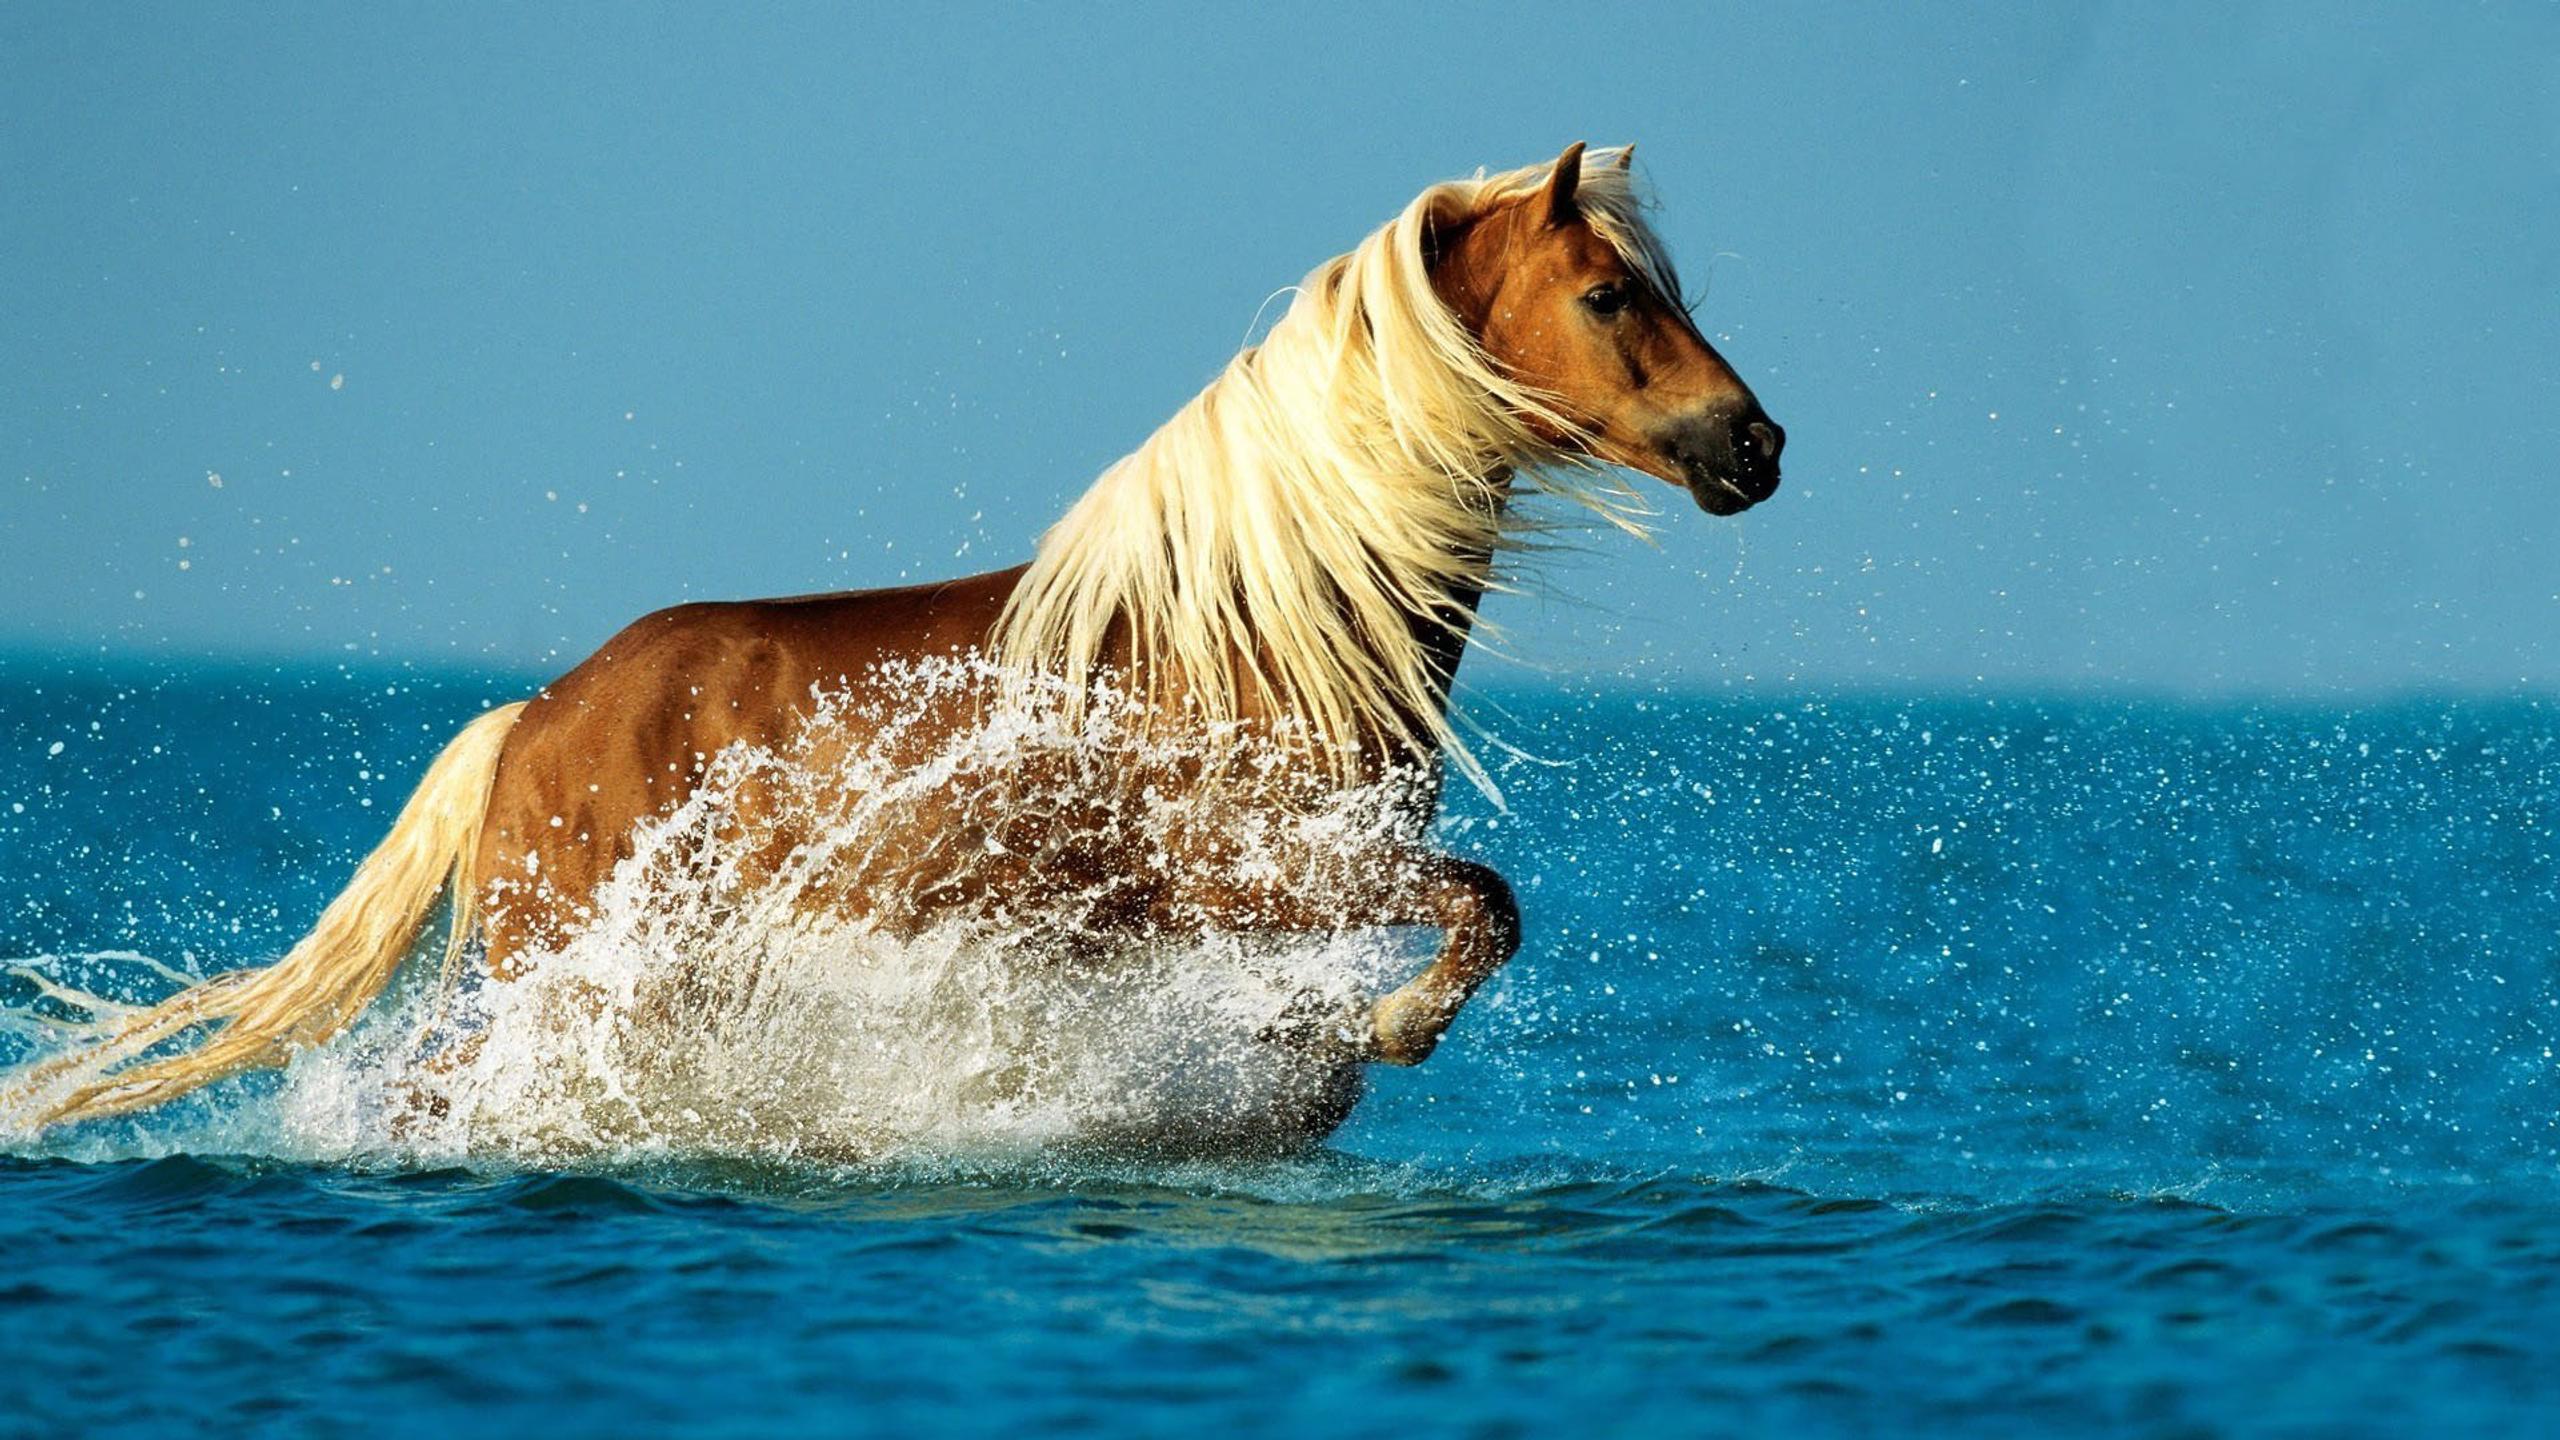 Wonderful horse running in the water - HD animal wallpaper